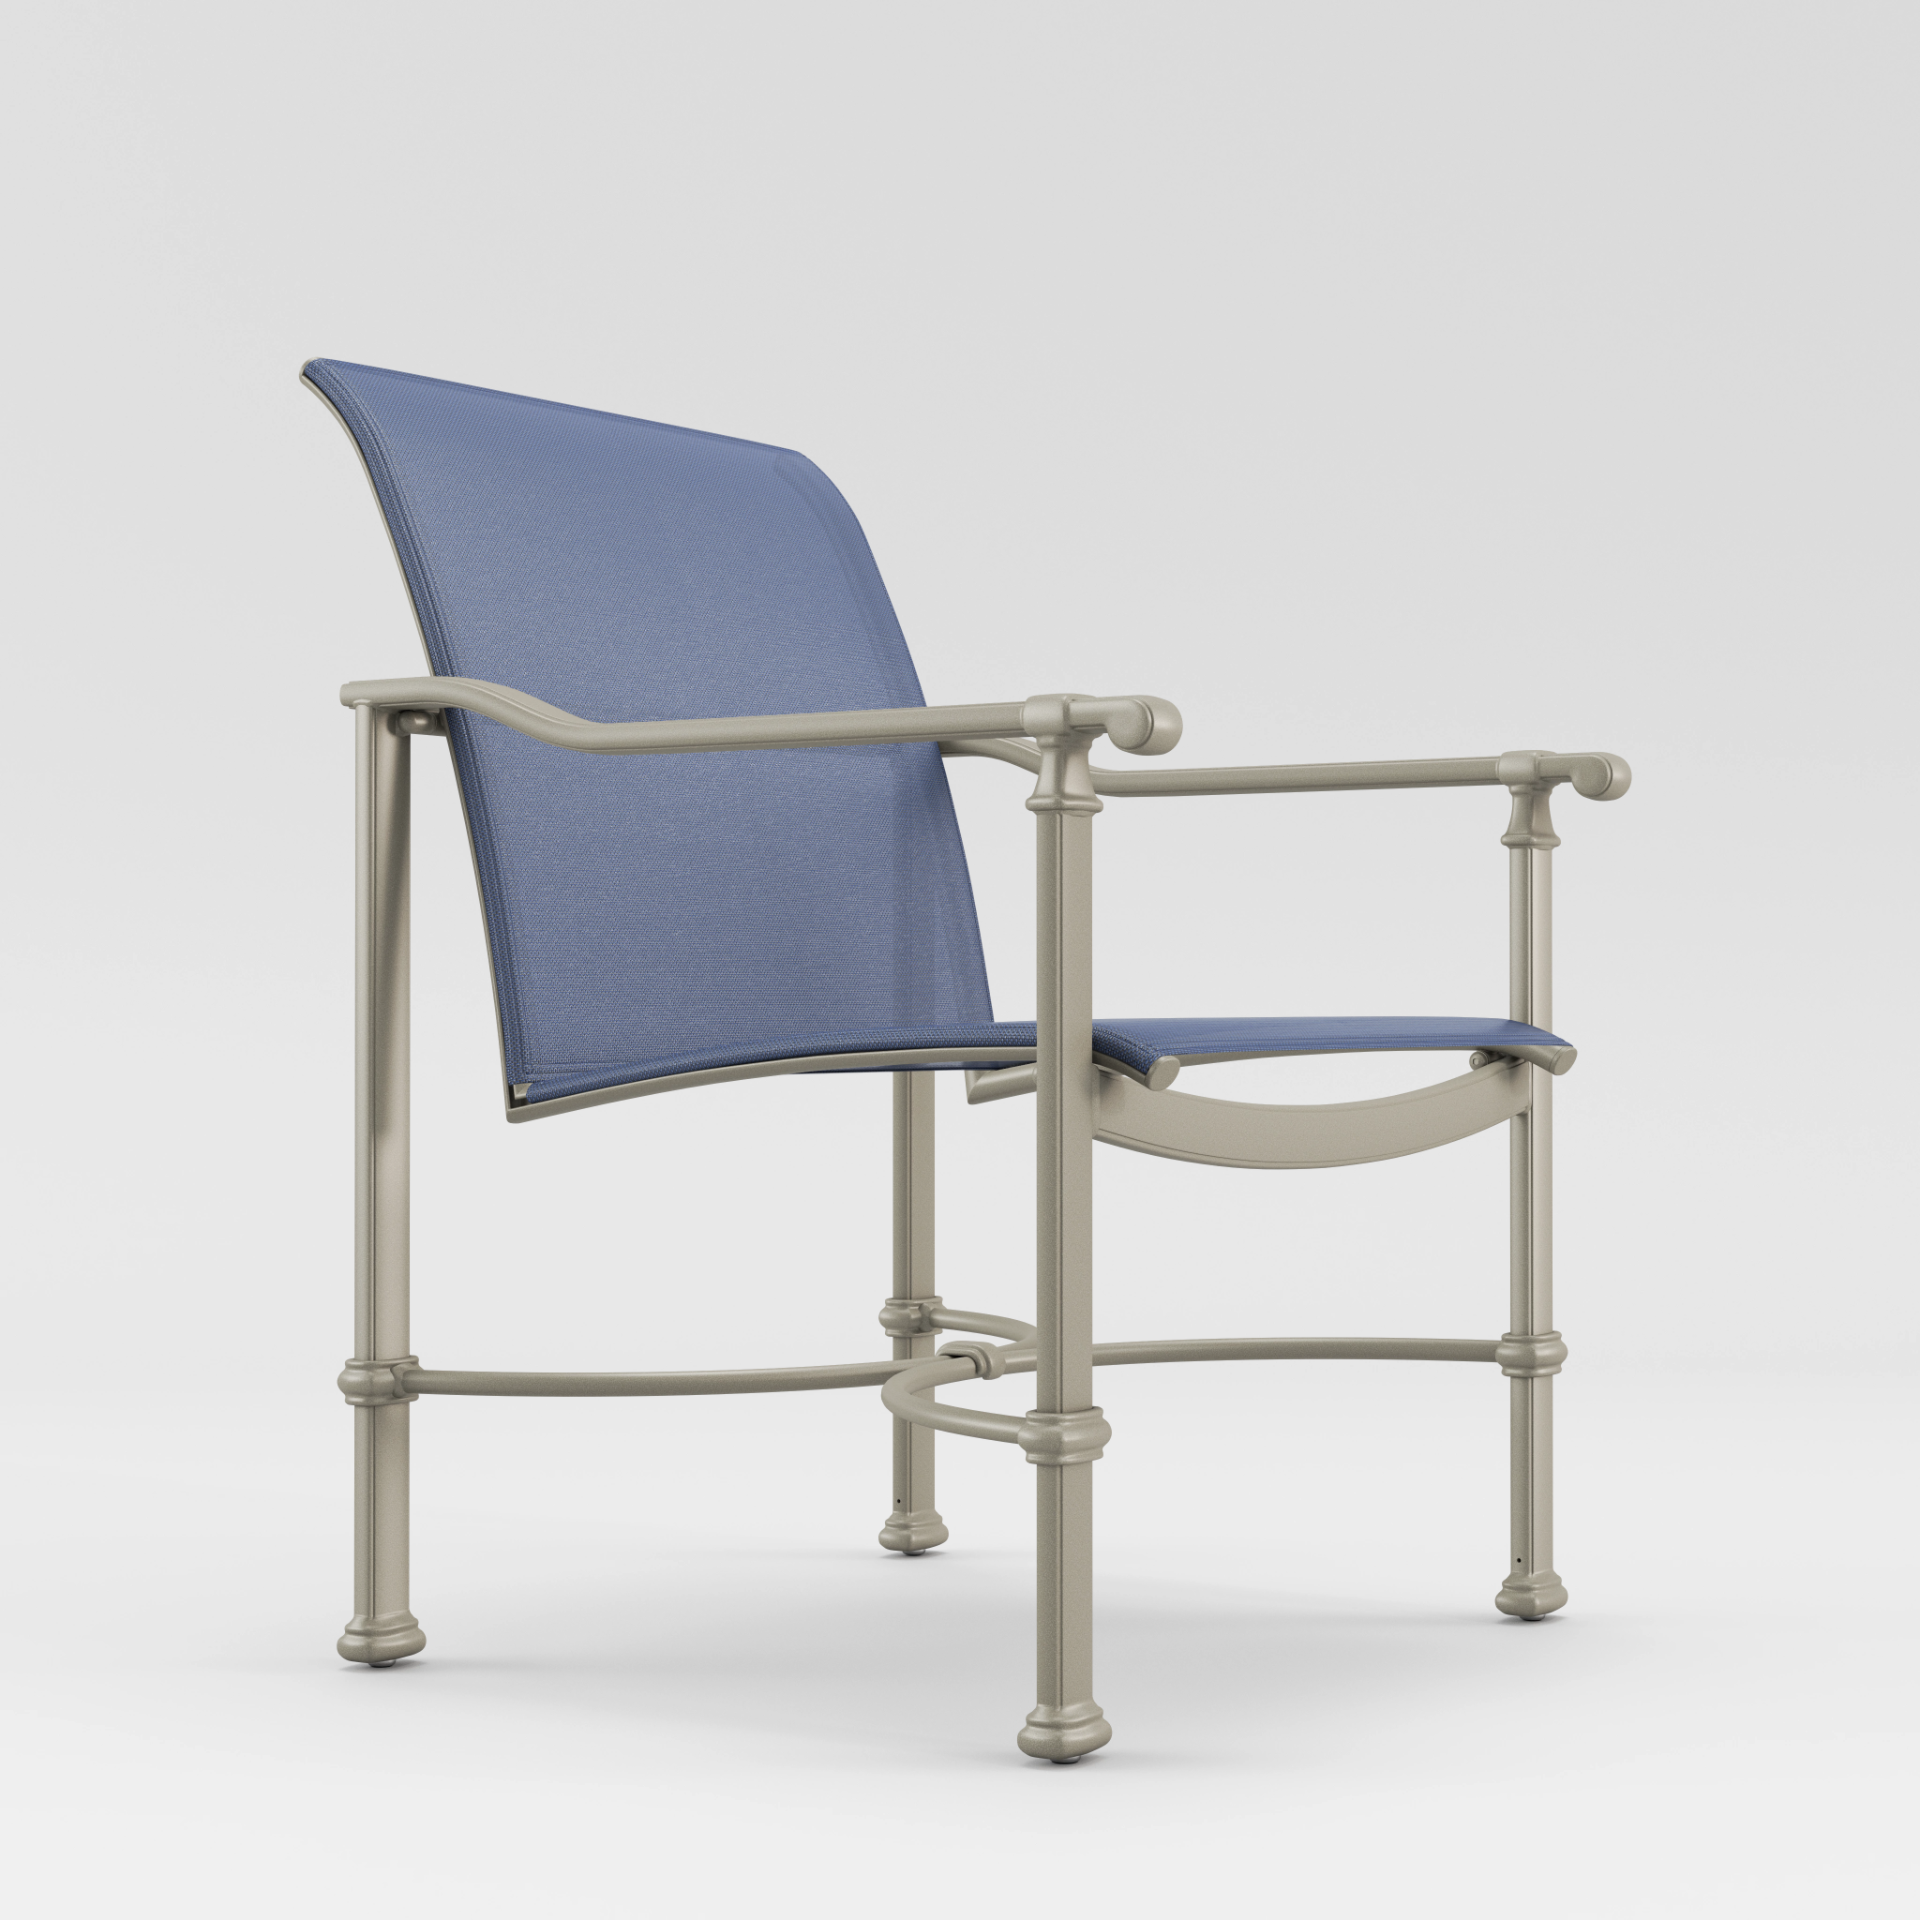 Fremont Sling Arm Chair by Brown Jordan